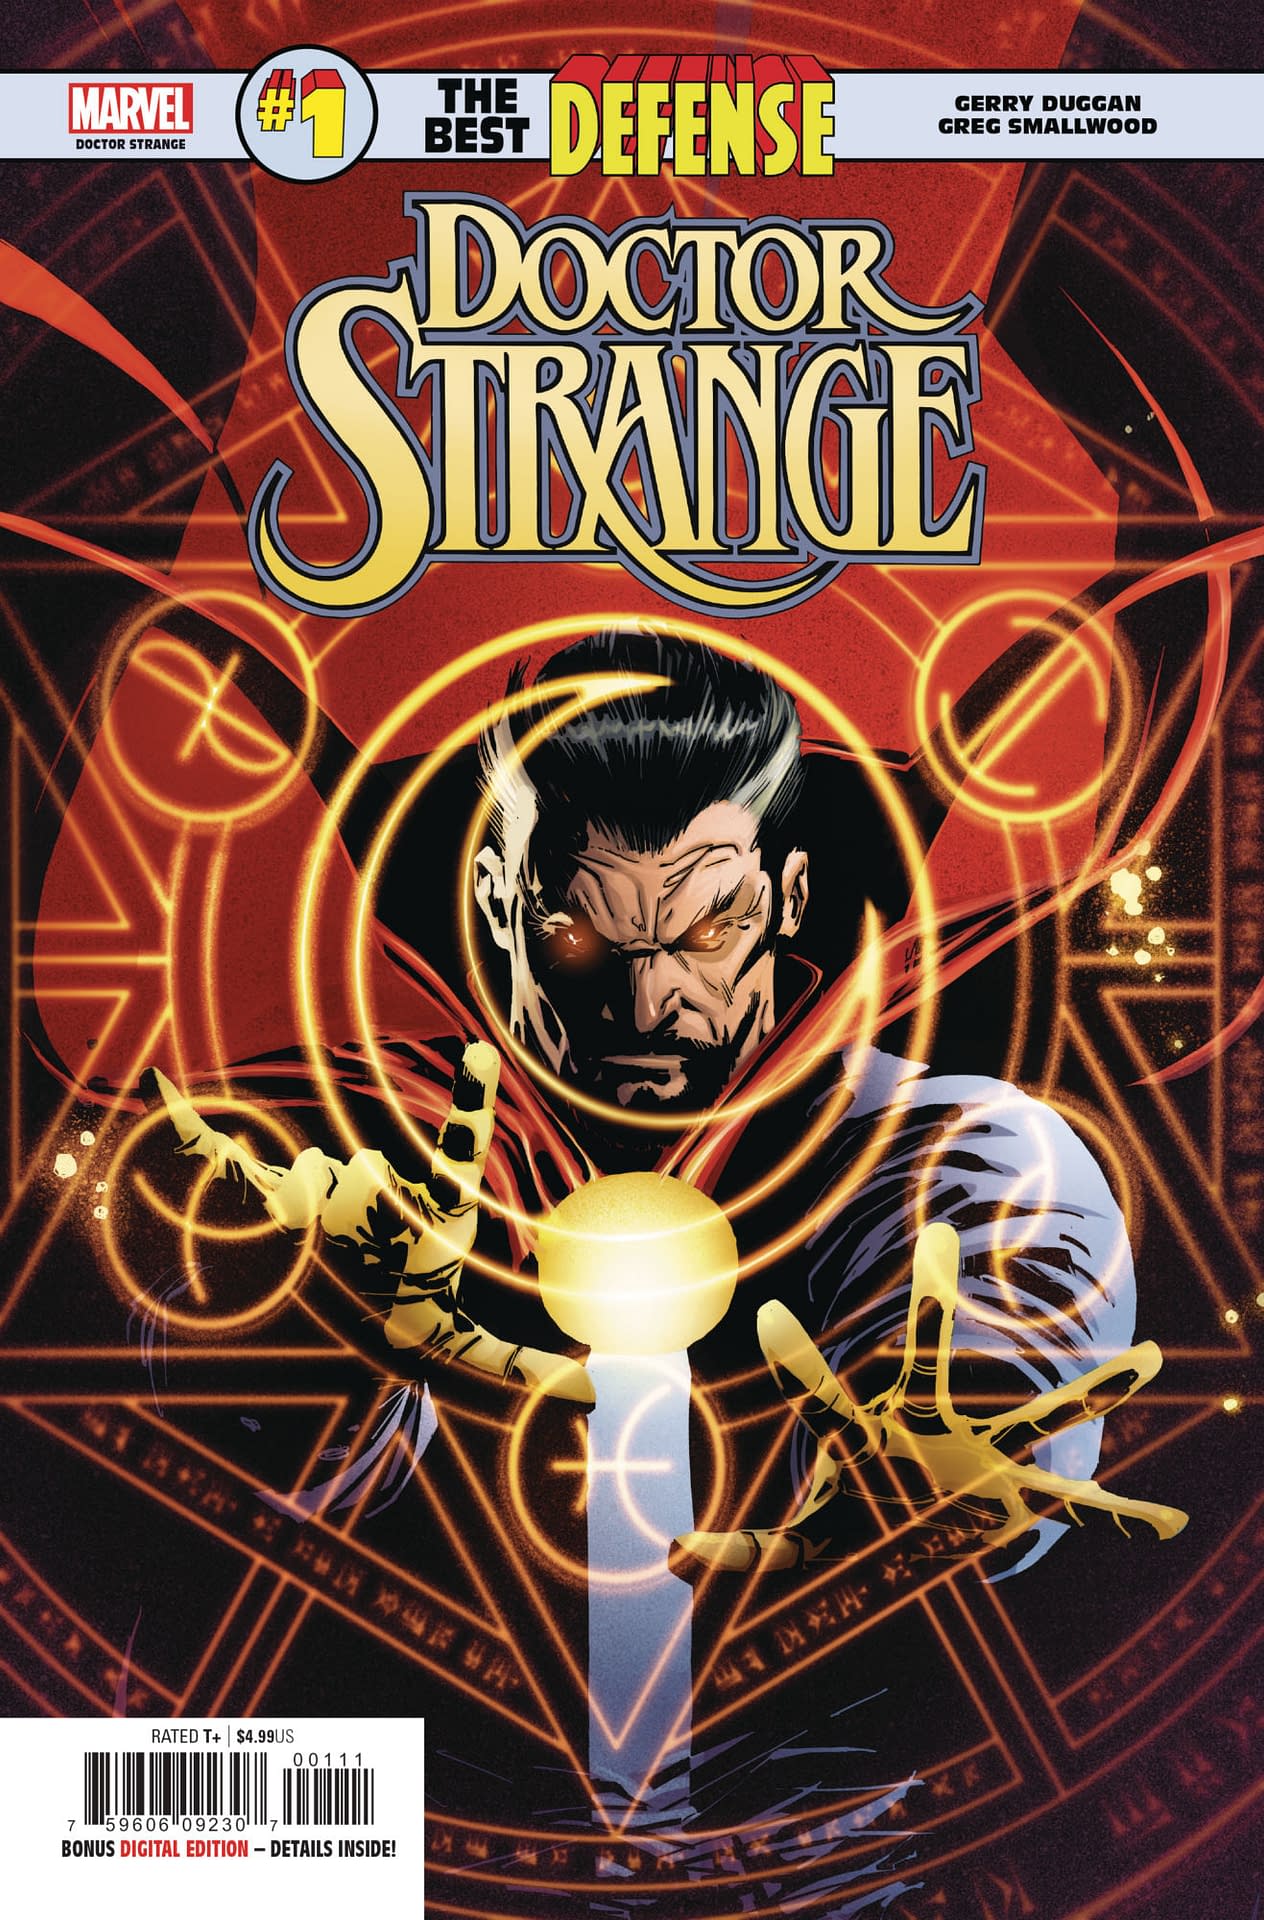 Doctor Strange Isn't Looking So Well These Days, in Next Week's Best Defense: Doctor Strange